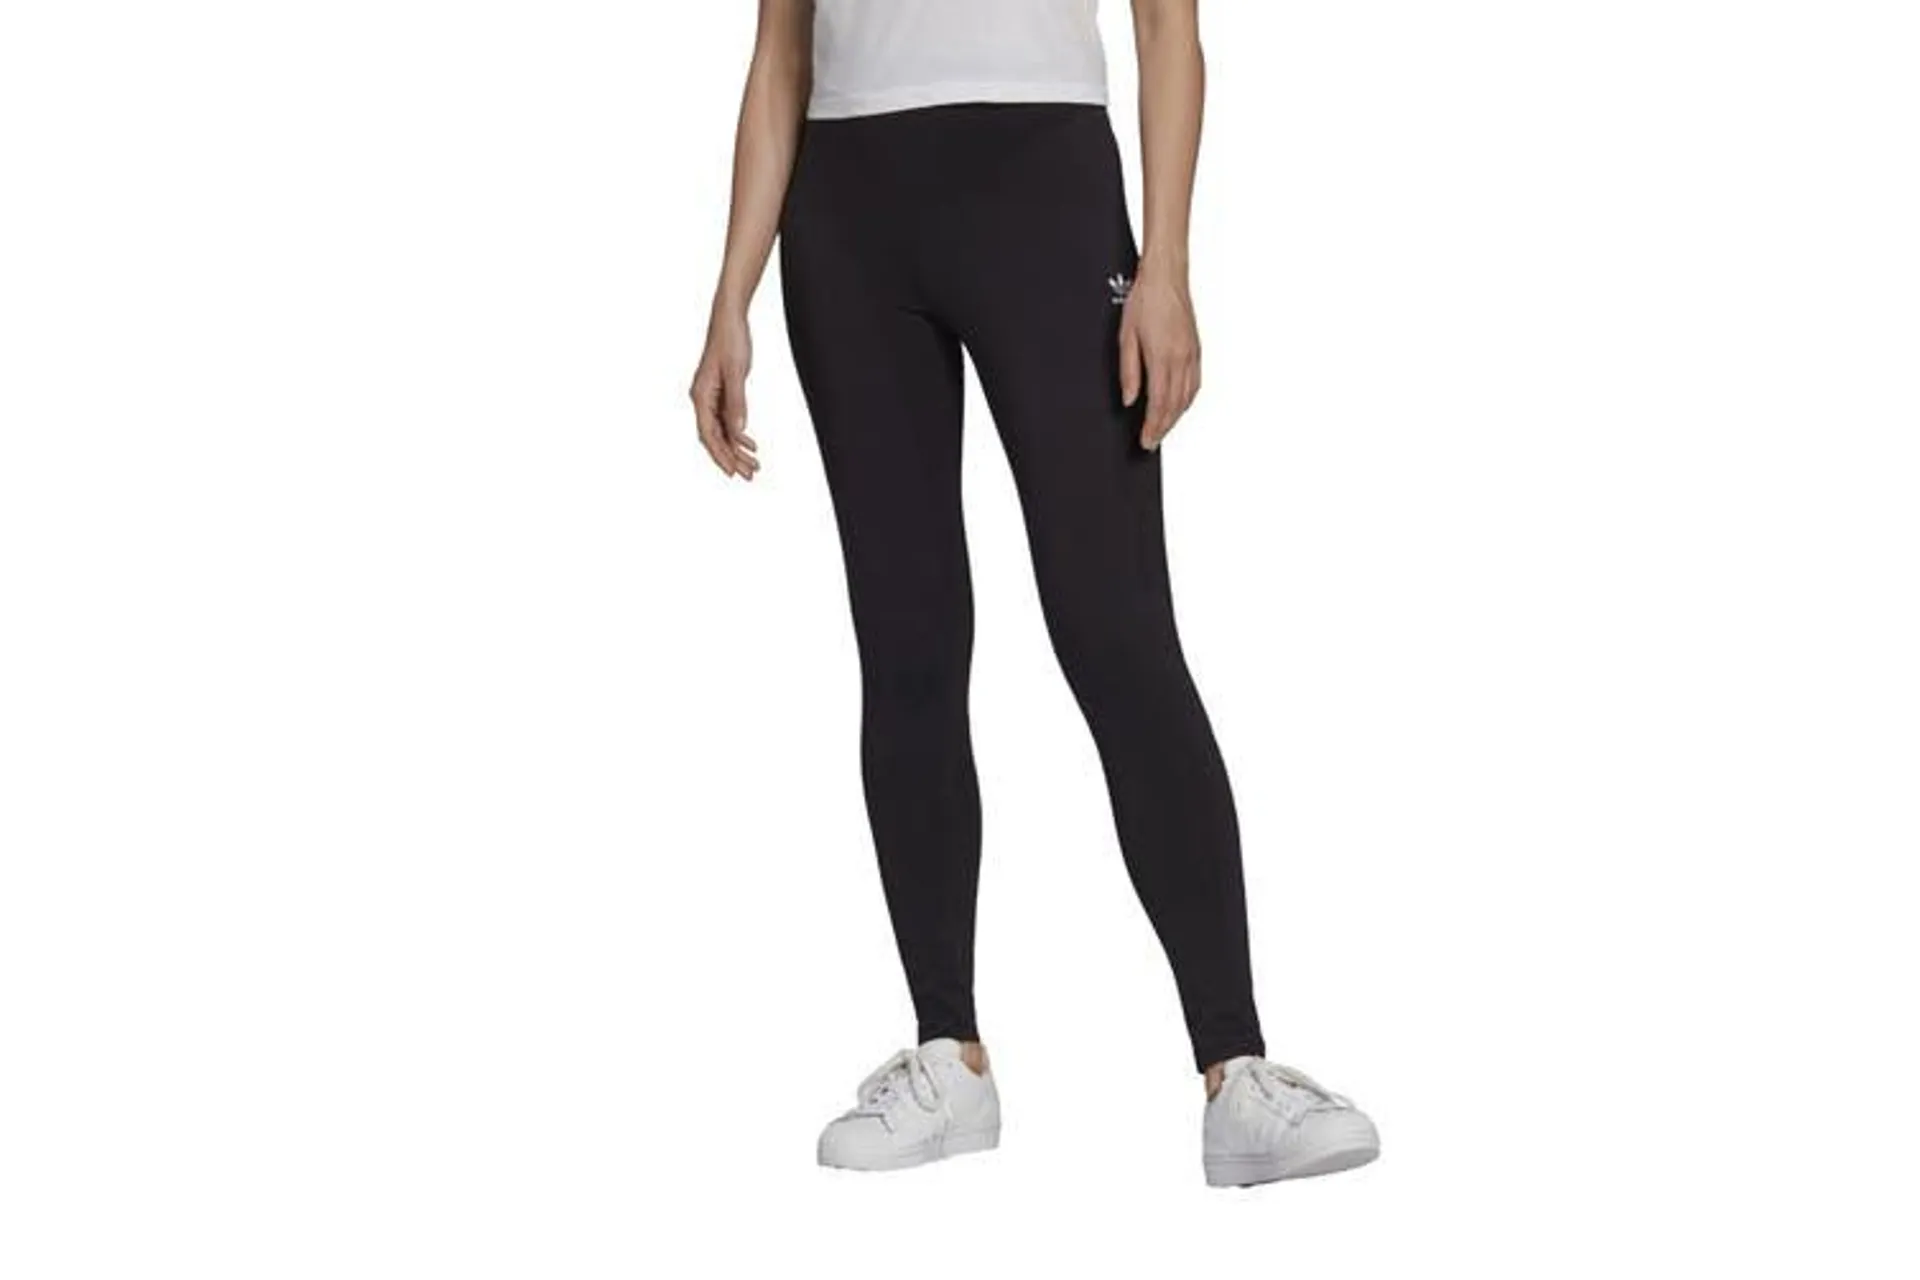 Adidas Women's Tights (Black/White, Size S)